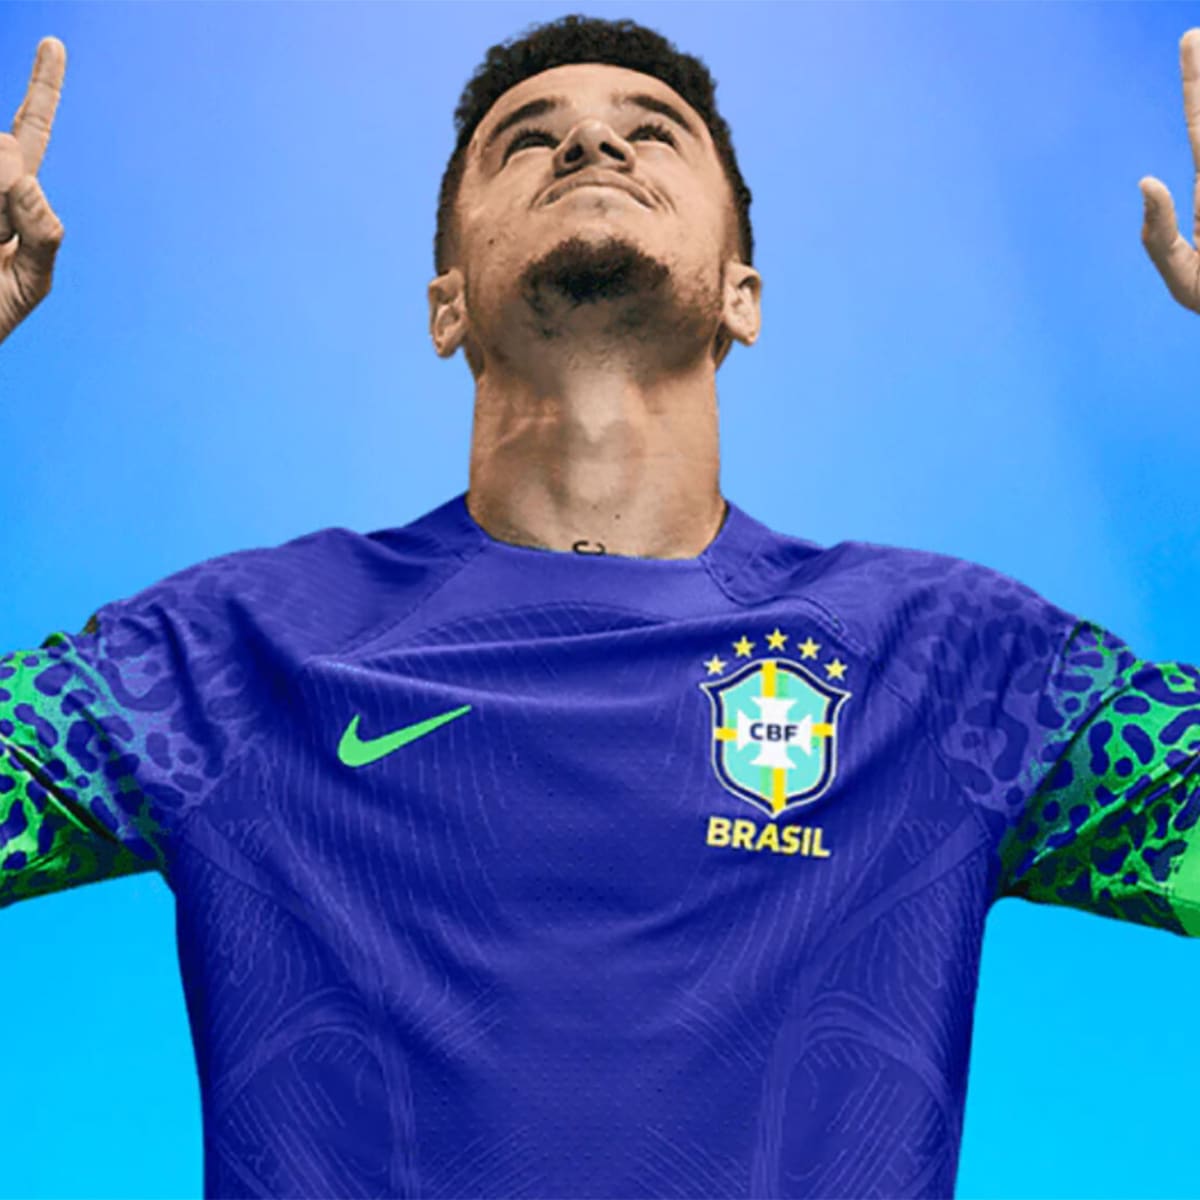 Nike NIKE BRAZIL AWAY JERSEY SOCCER FOOTBALL SHIRT FIFA WORLD CUP